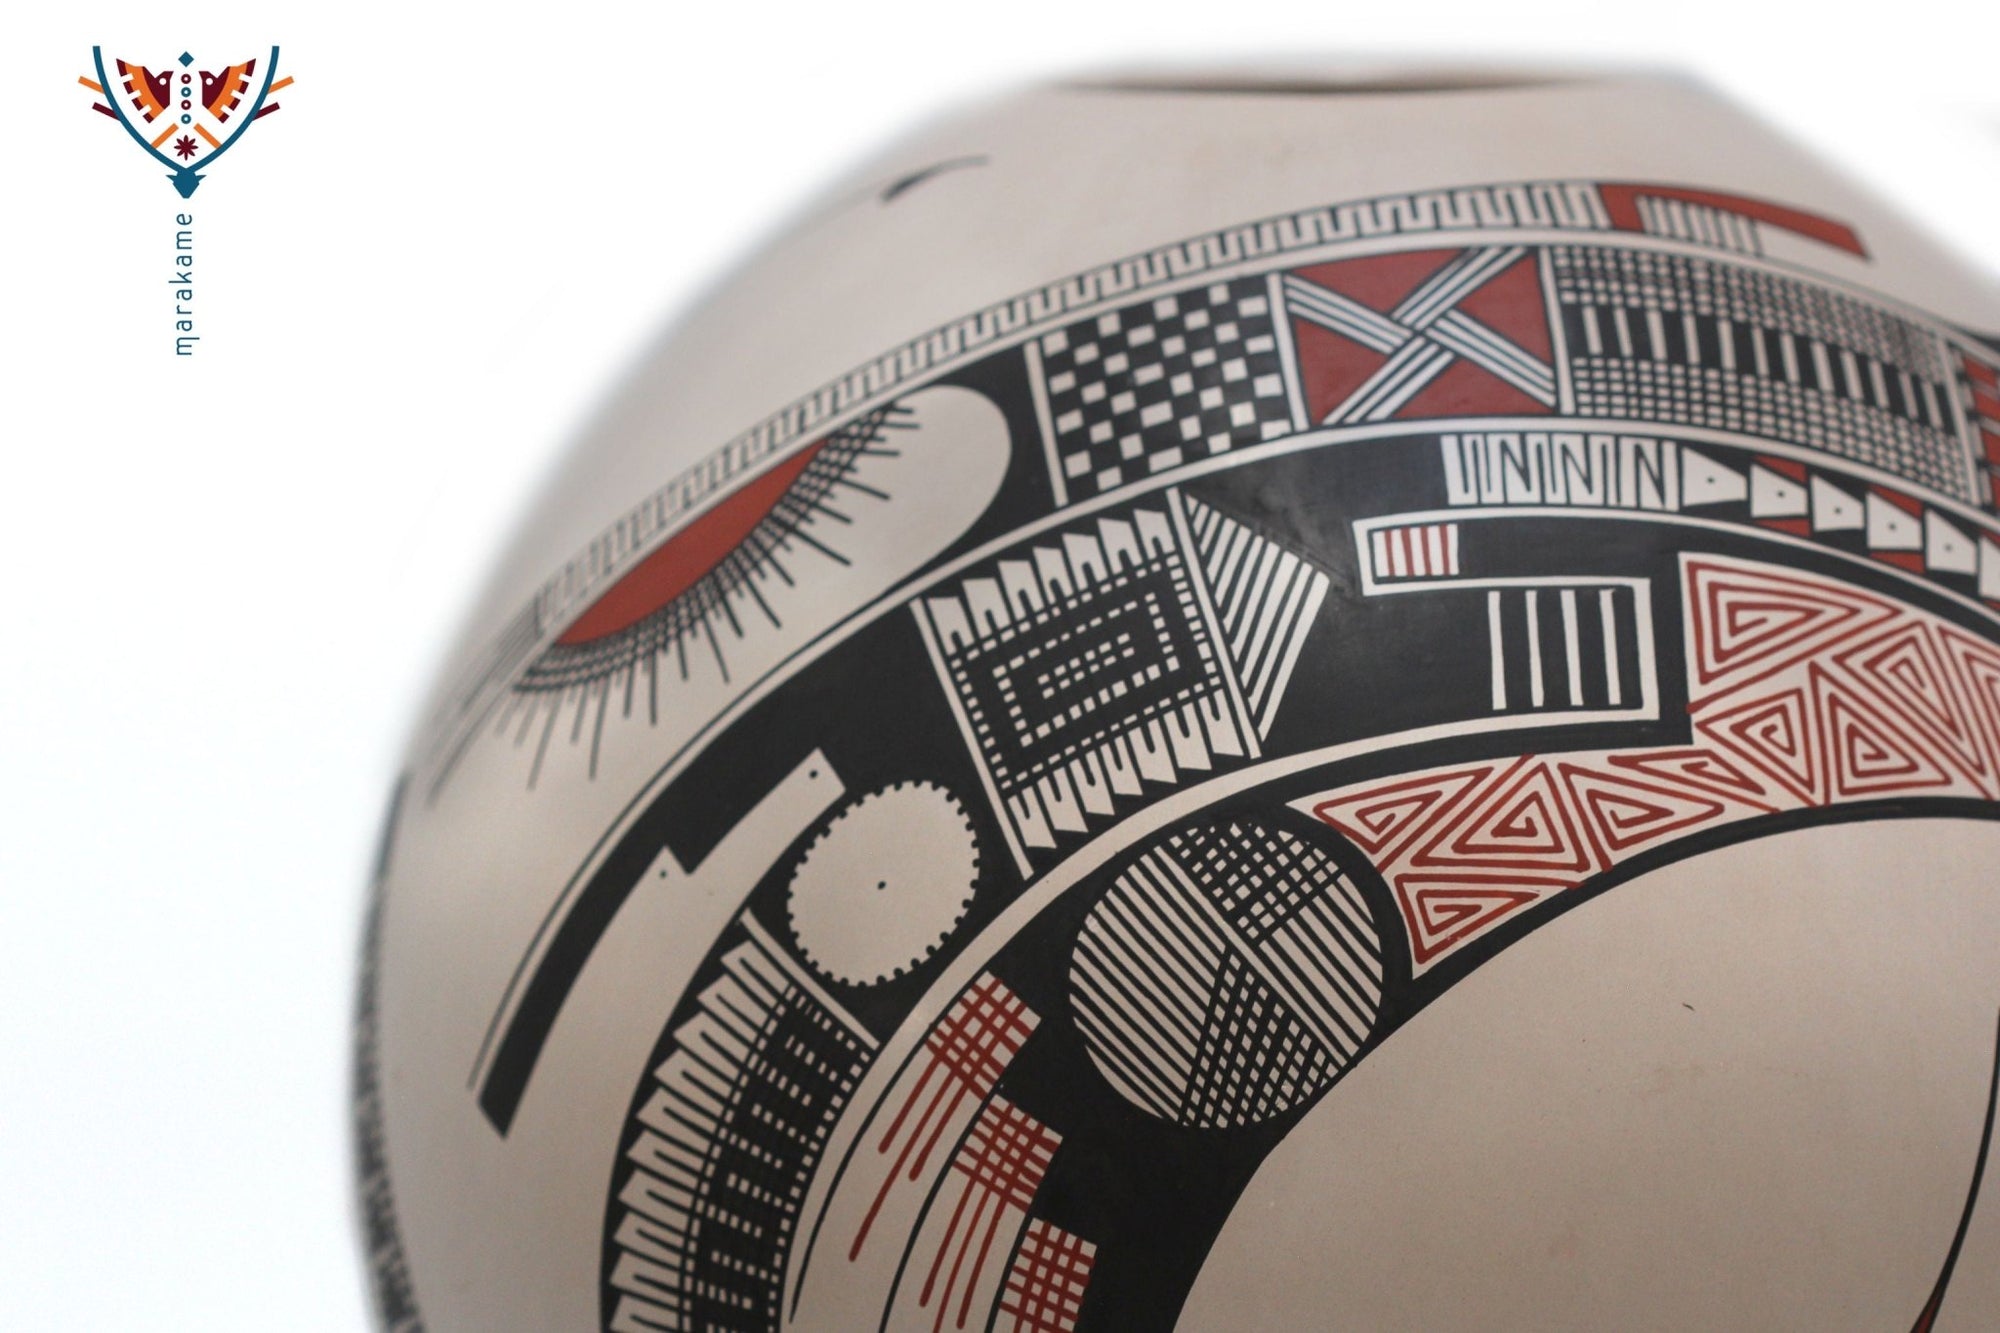 Mata Ortiz Ceramics - Spherical - Huichol Art - Marakame